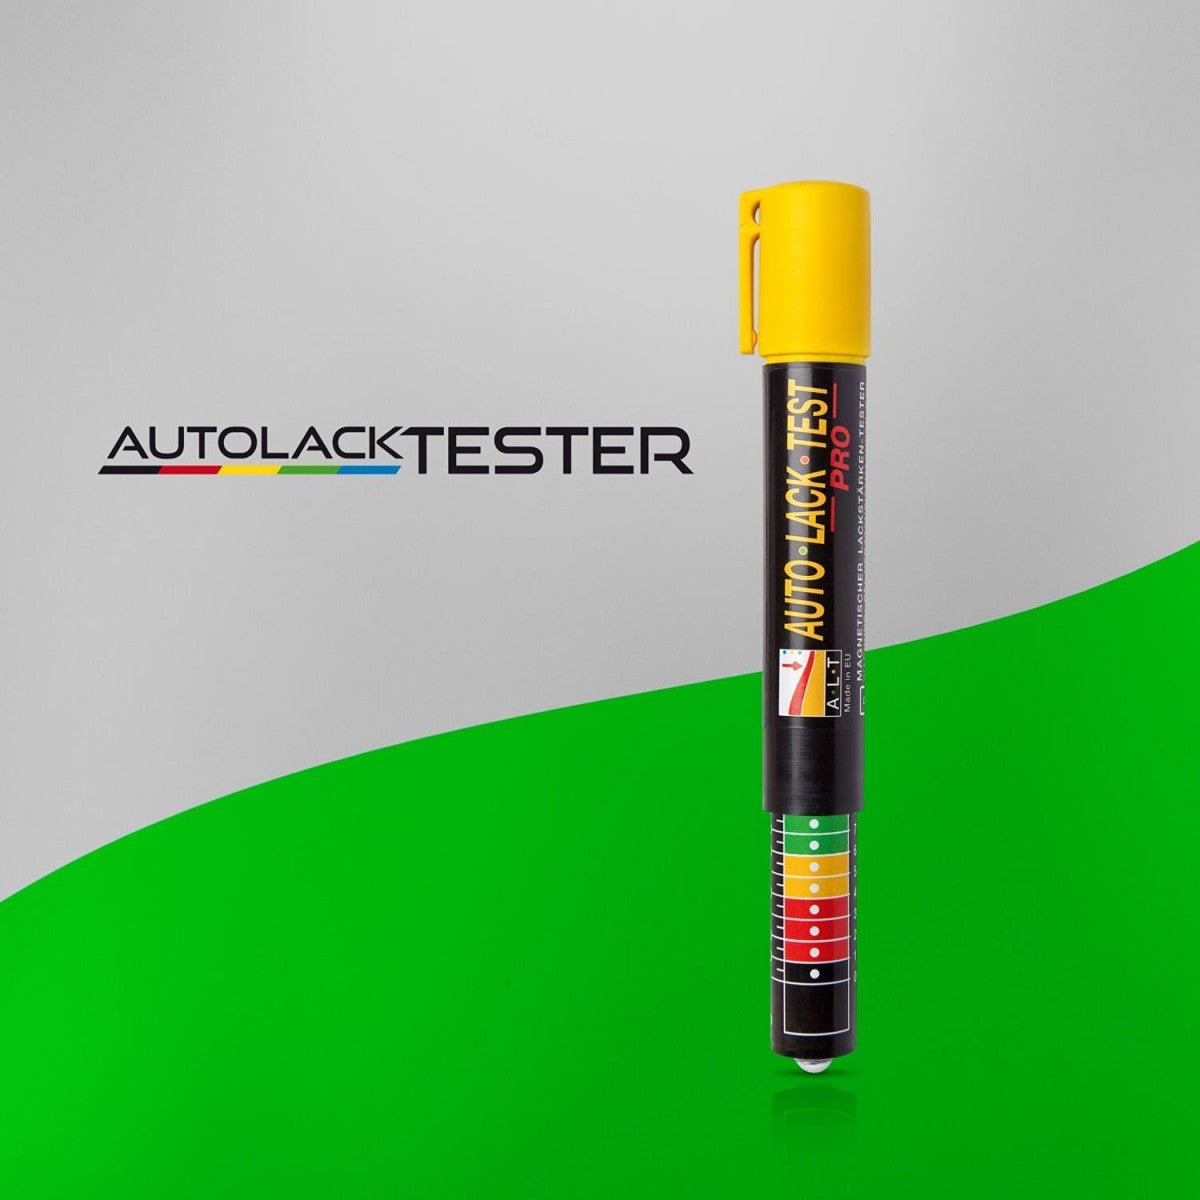 Autolack-Tester Pro - Das Original - Lacktester - 1 Stück - CLEANEXTREME